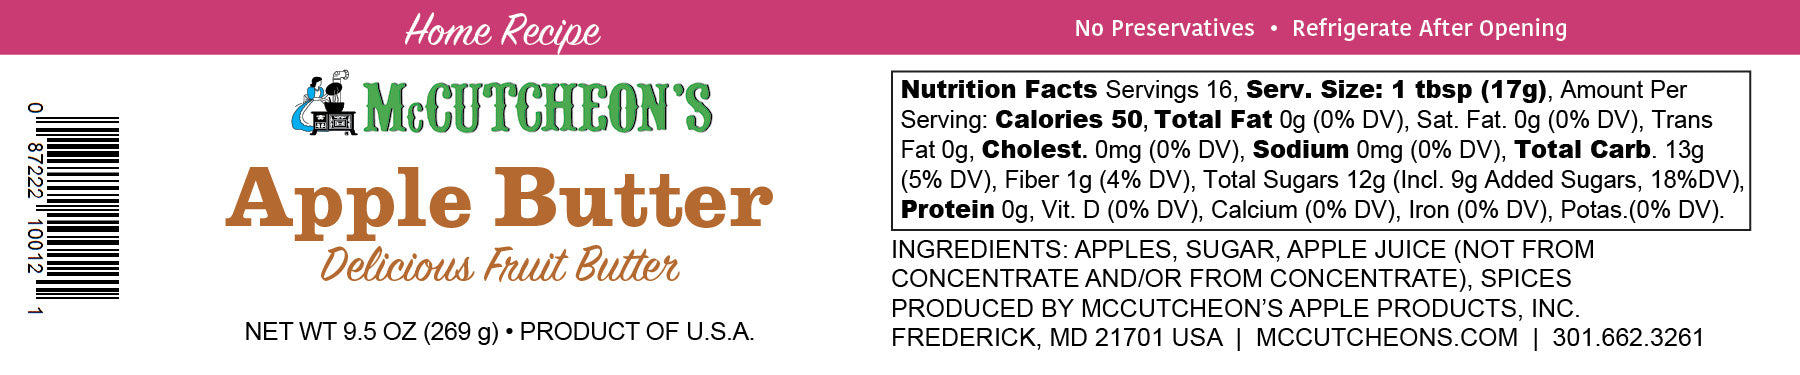 nutritional label for McCutcheon's mini apple butter